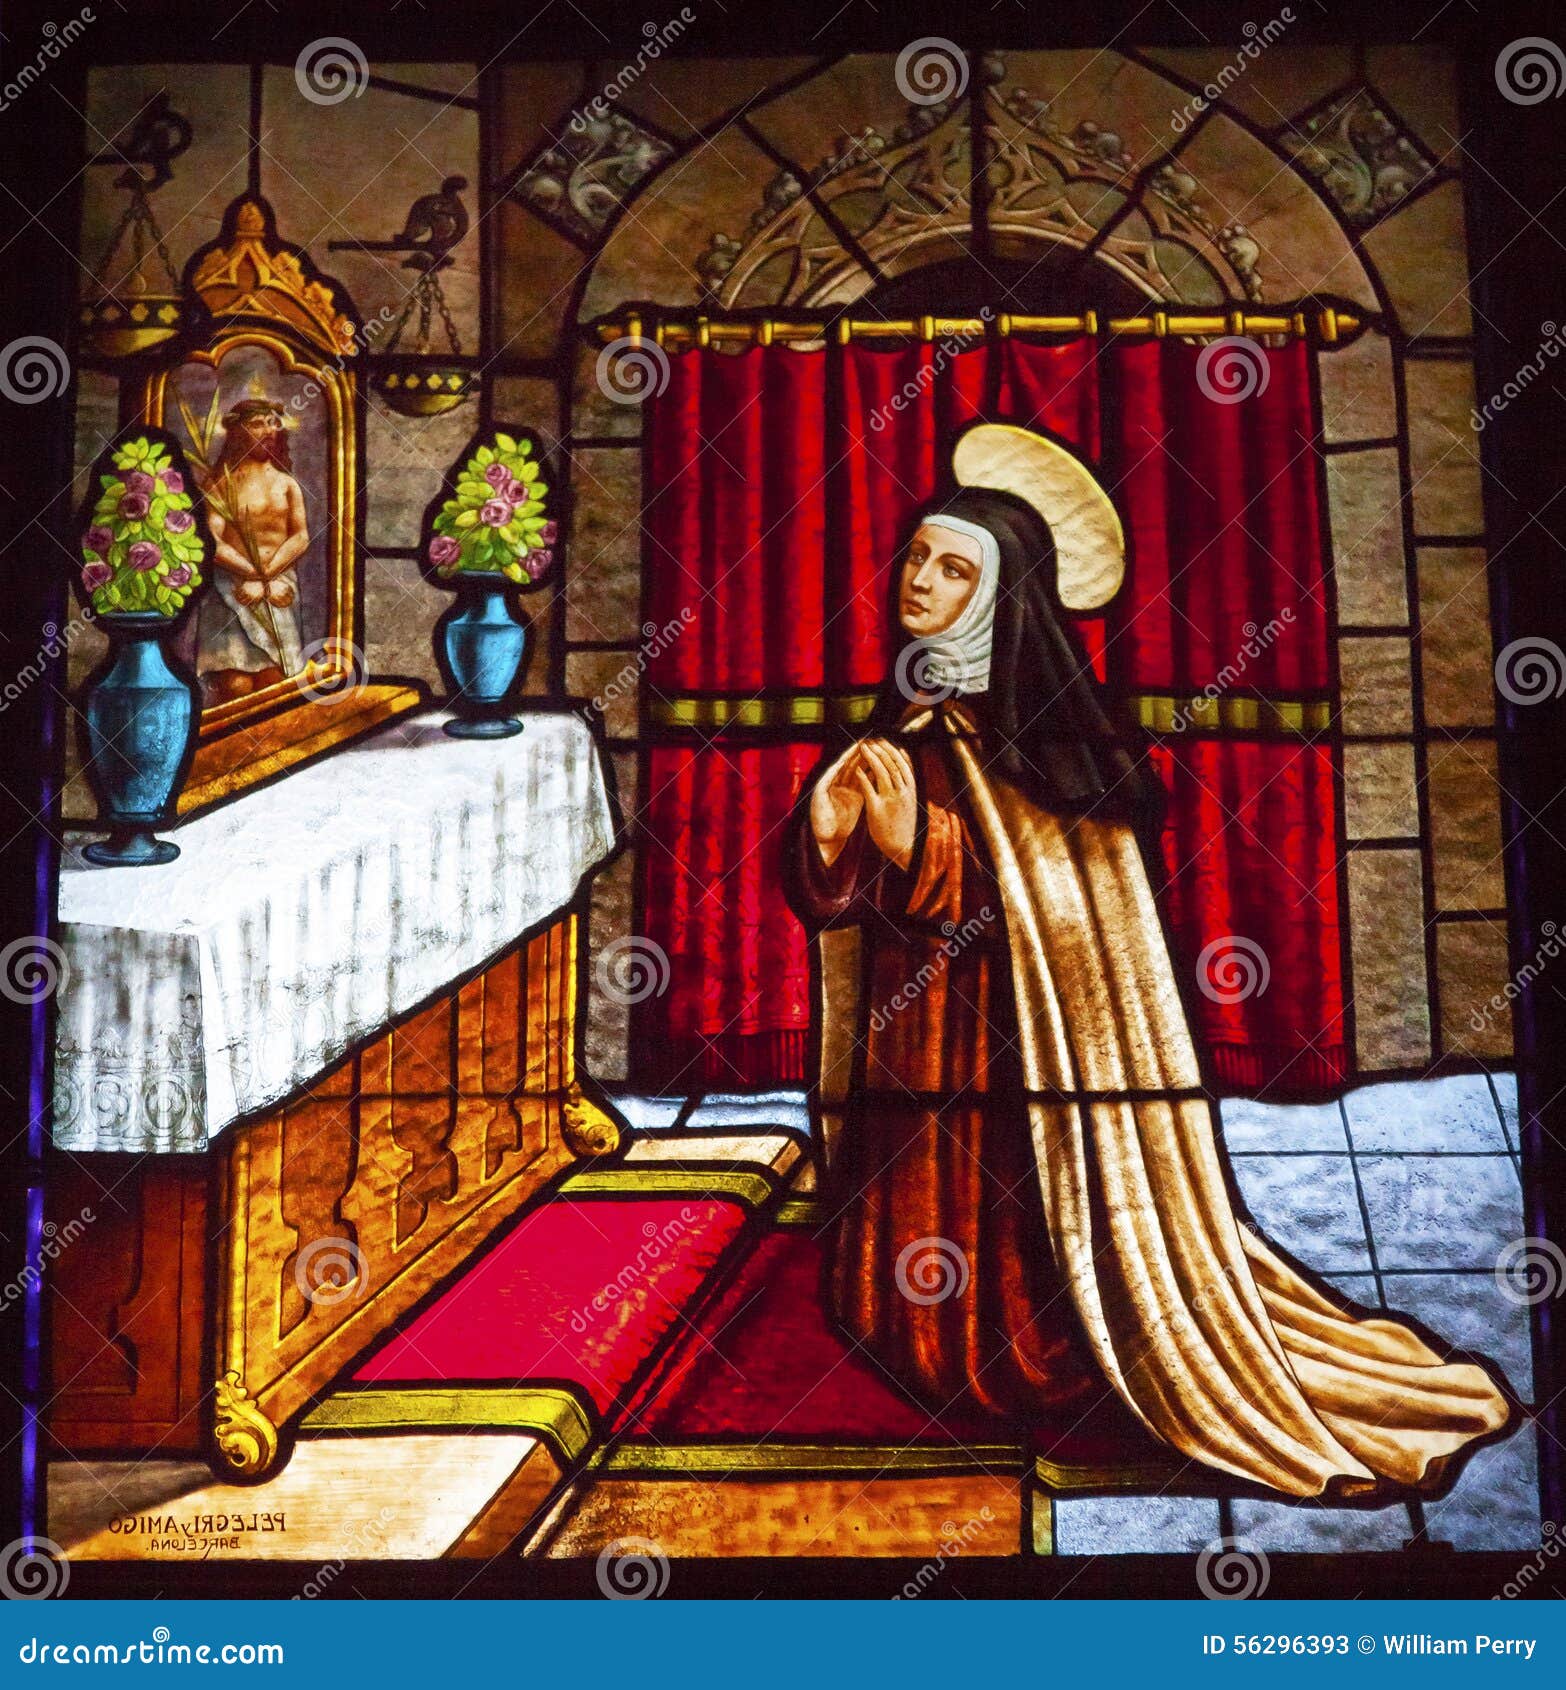 saint teresa stained glass convento de santa teresa avila spain